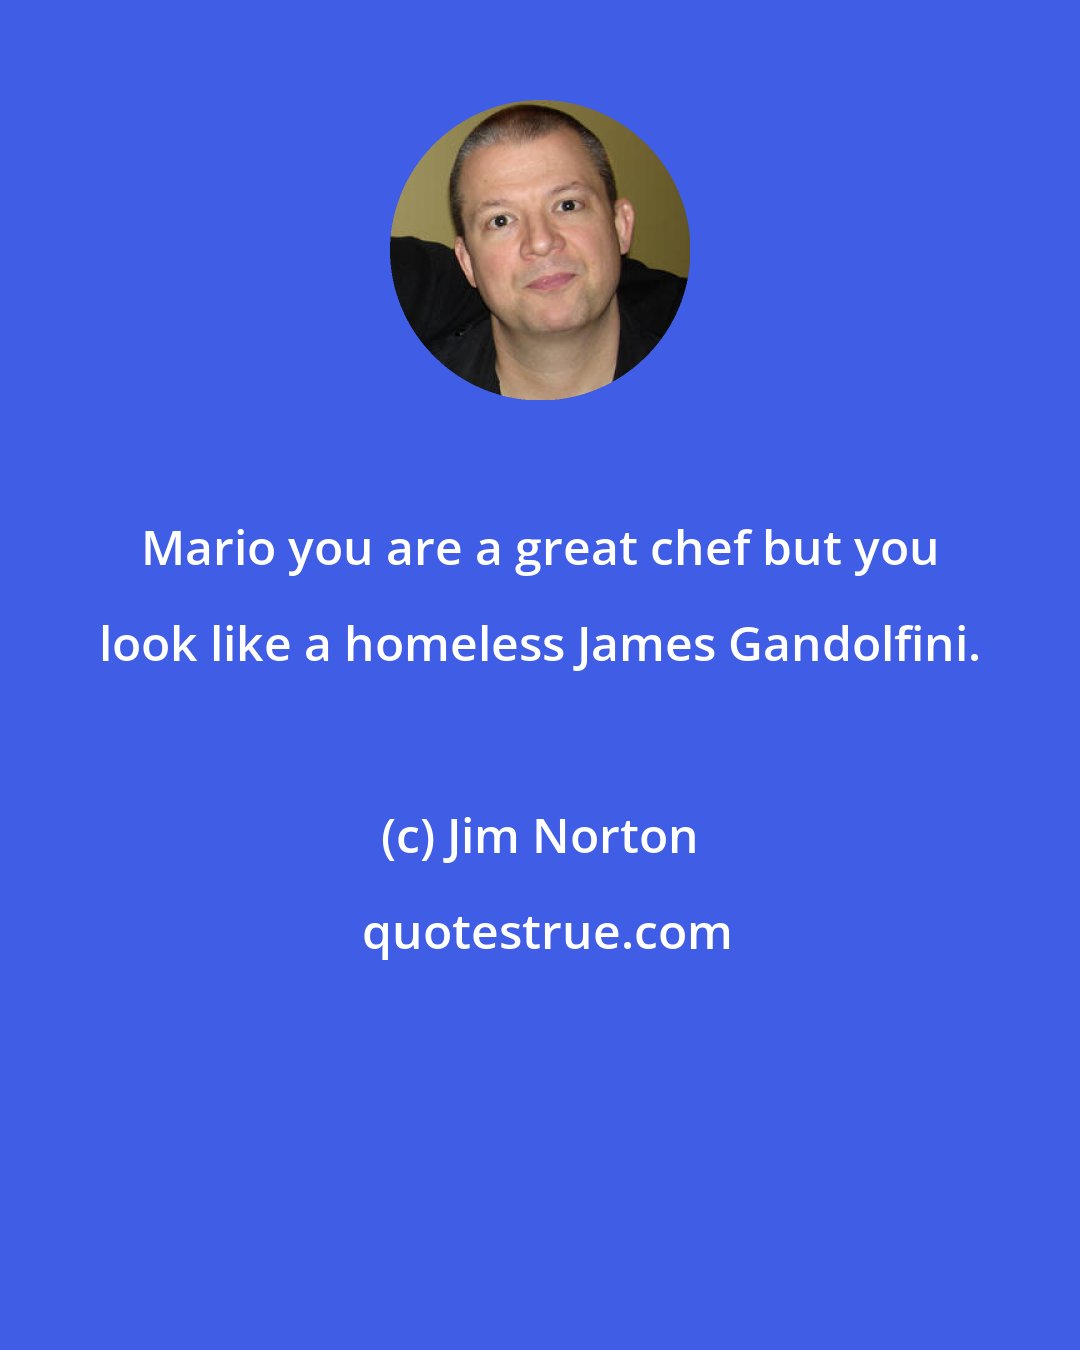 Jim Norton: Mario you are a great chef but you look like a homeless James Gandolfini.